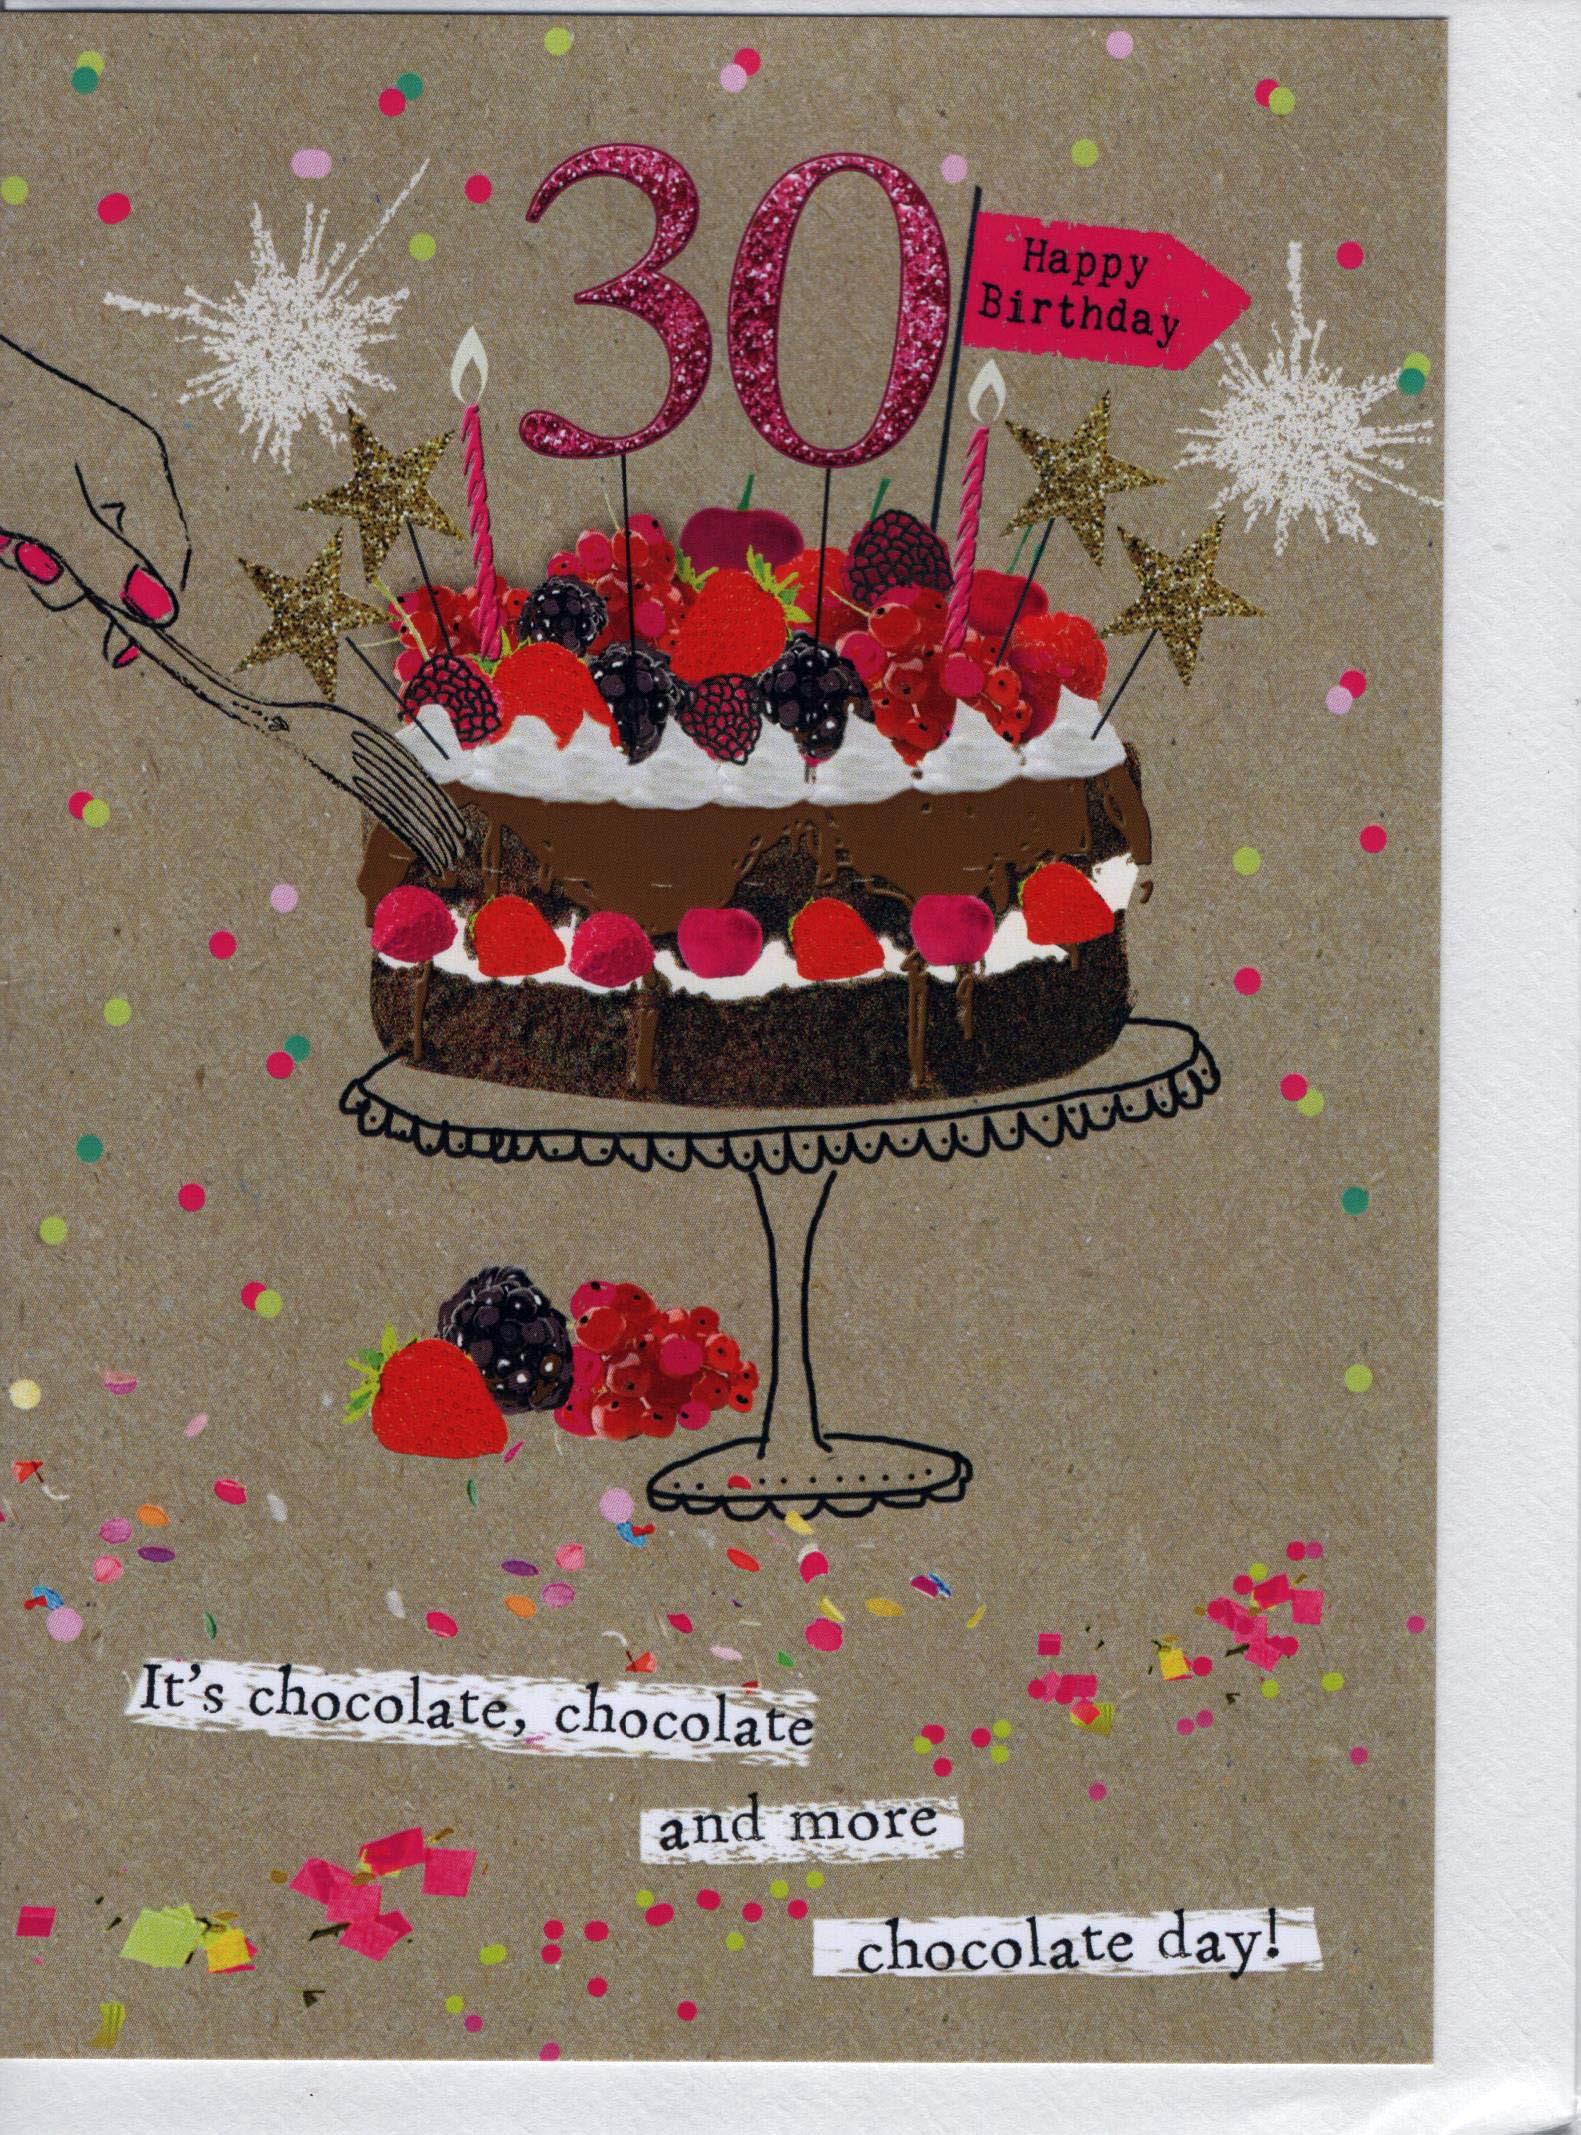 30 Happy Birthday it's Chocolate, Chocolate and more Chocolate Day!